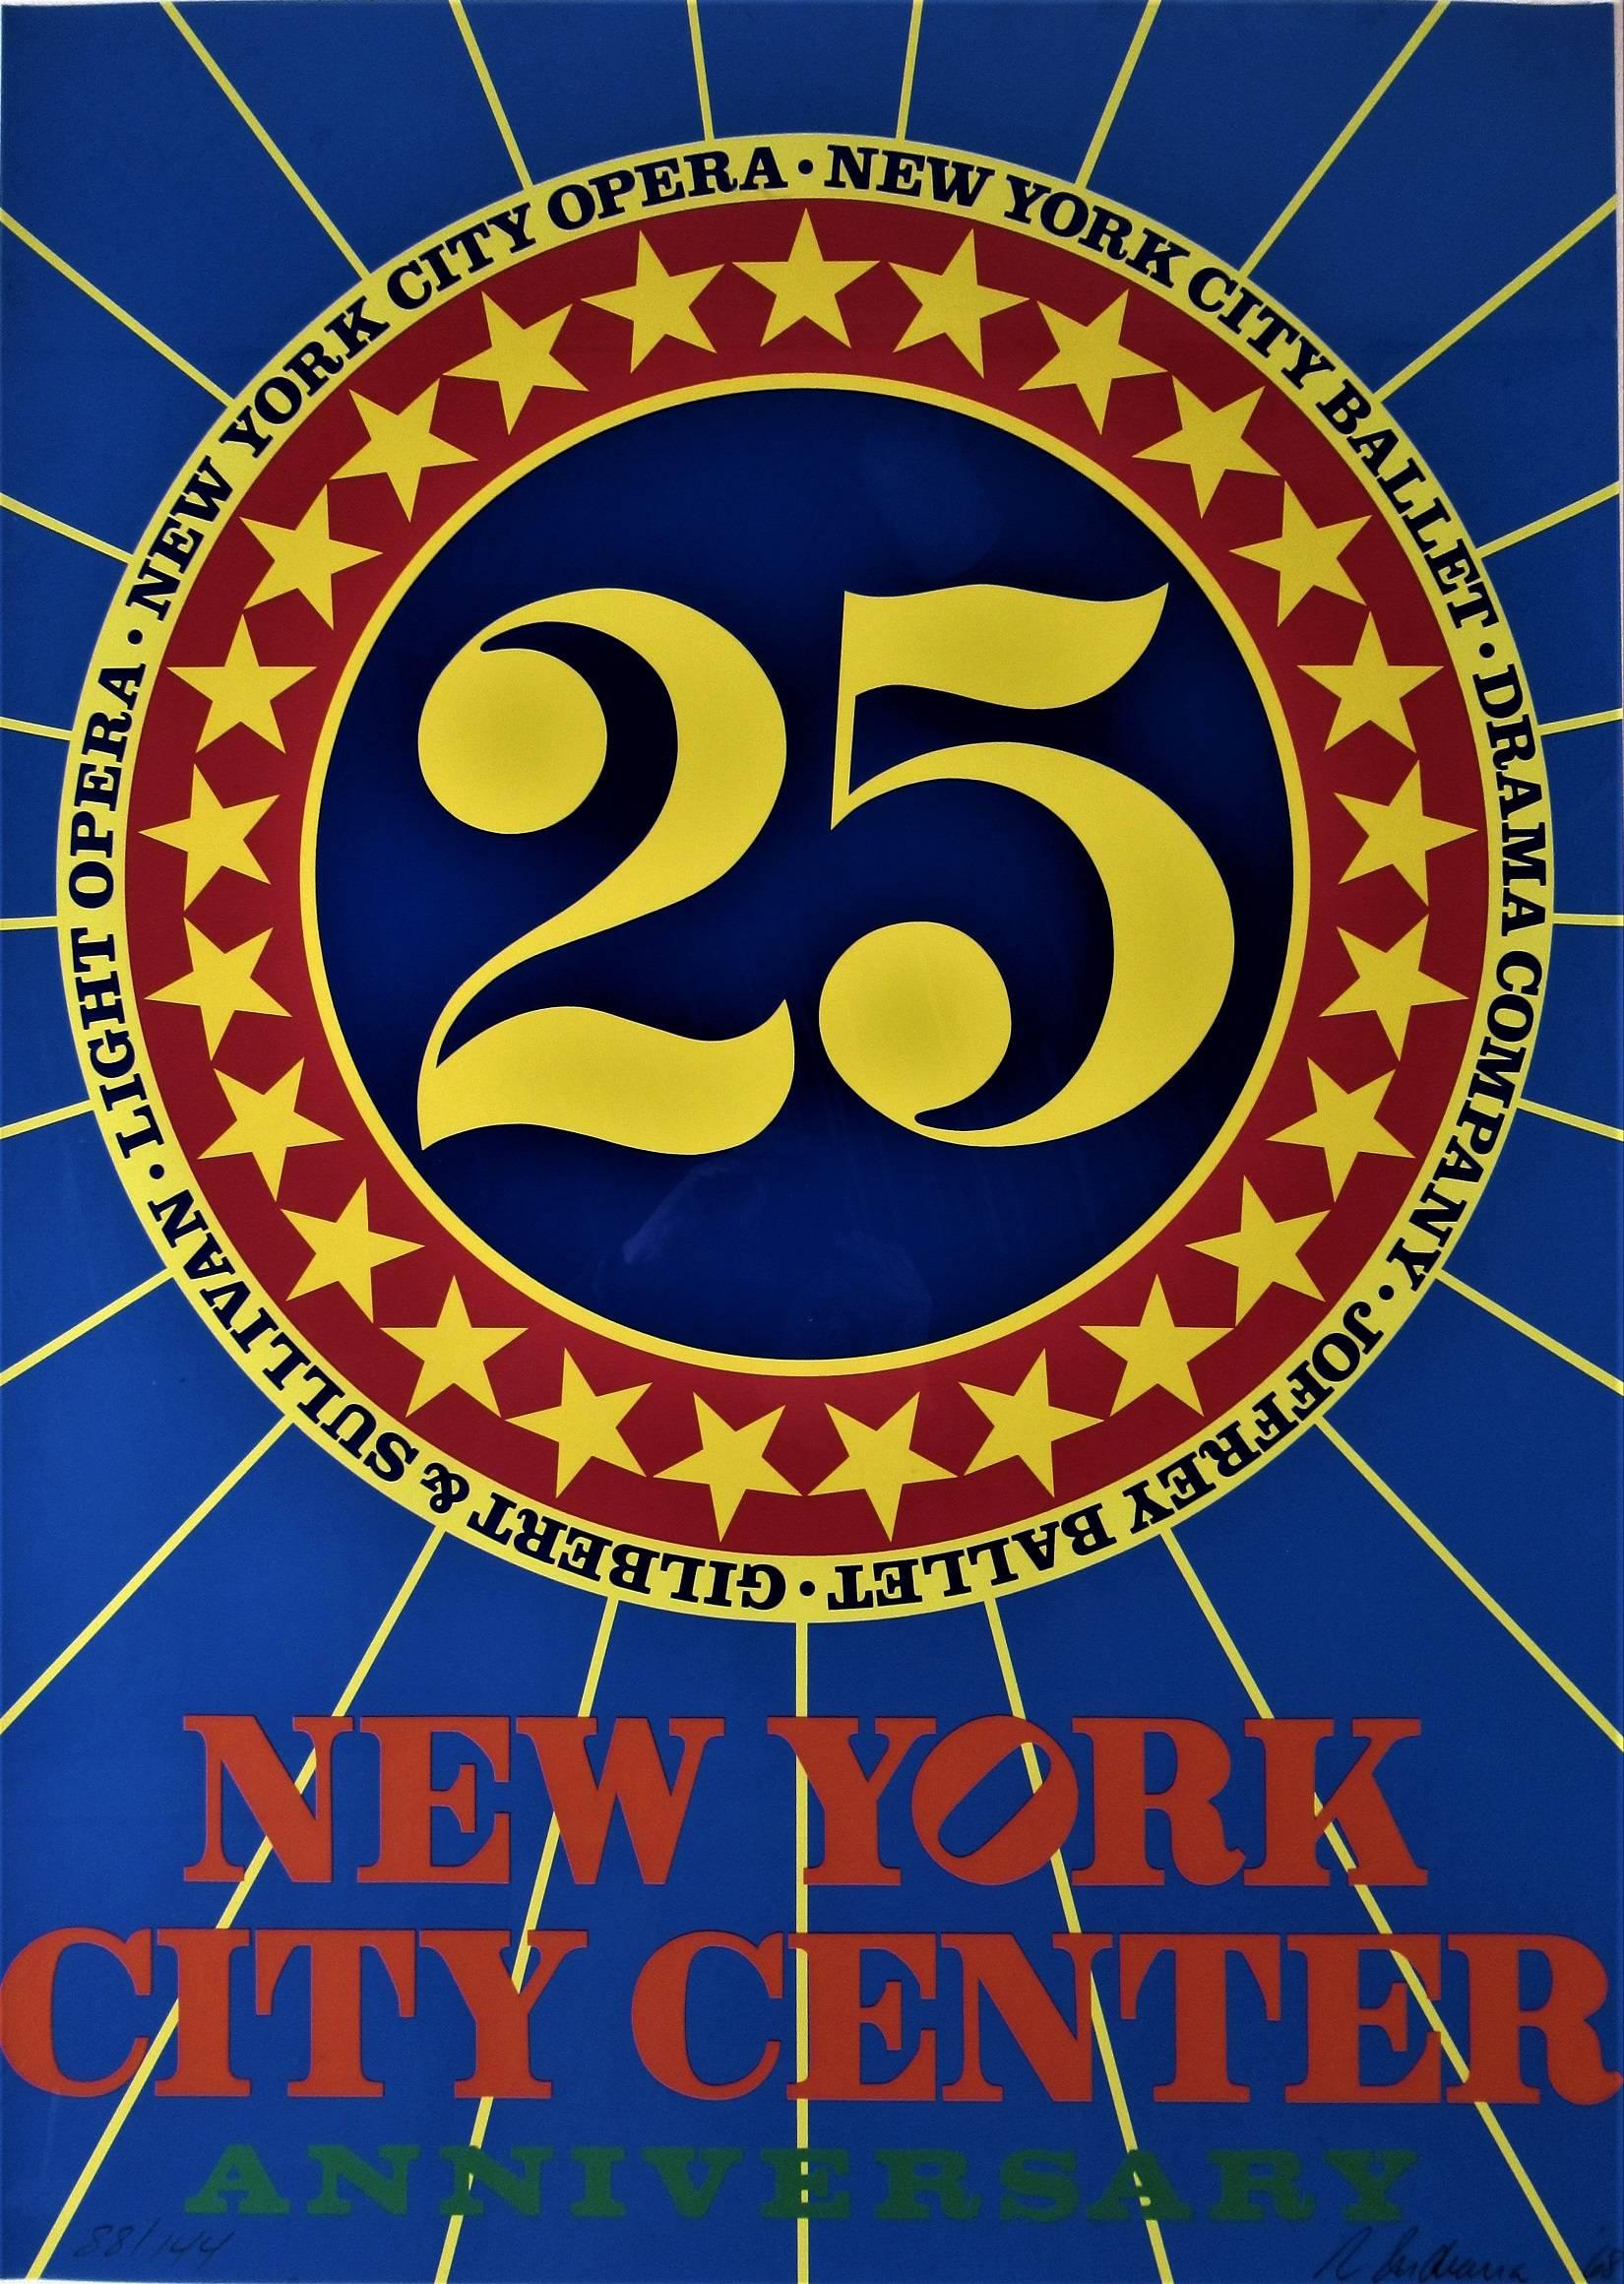 New York City Center 25th Anniversary - Print by Robert Indiana